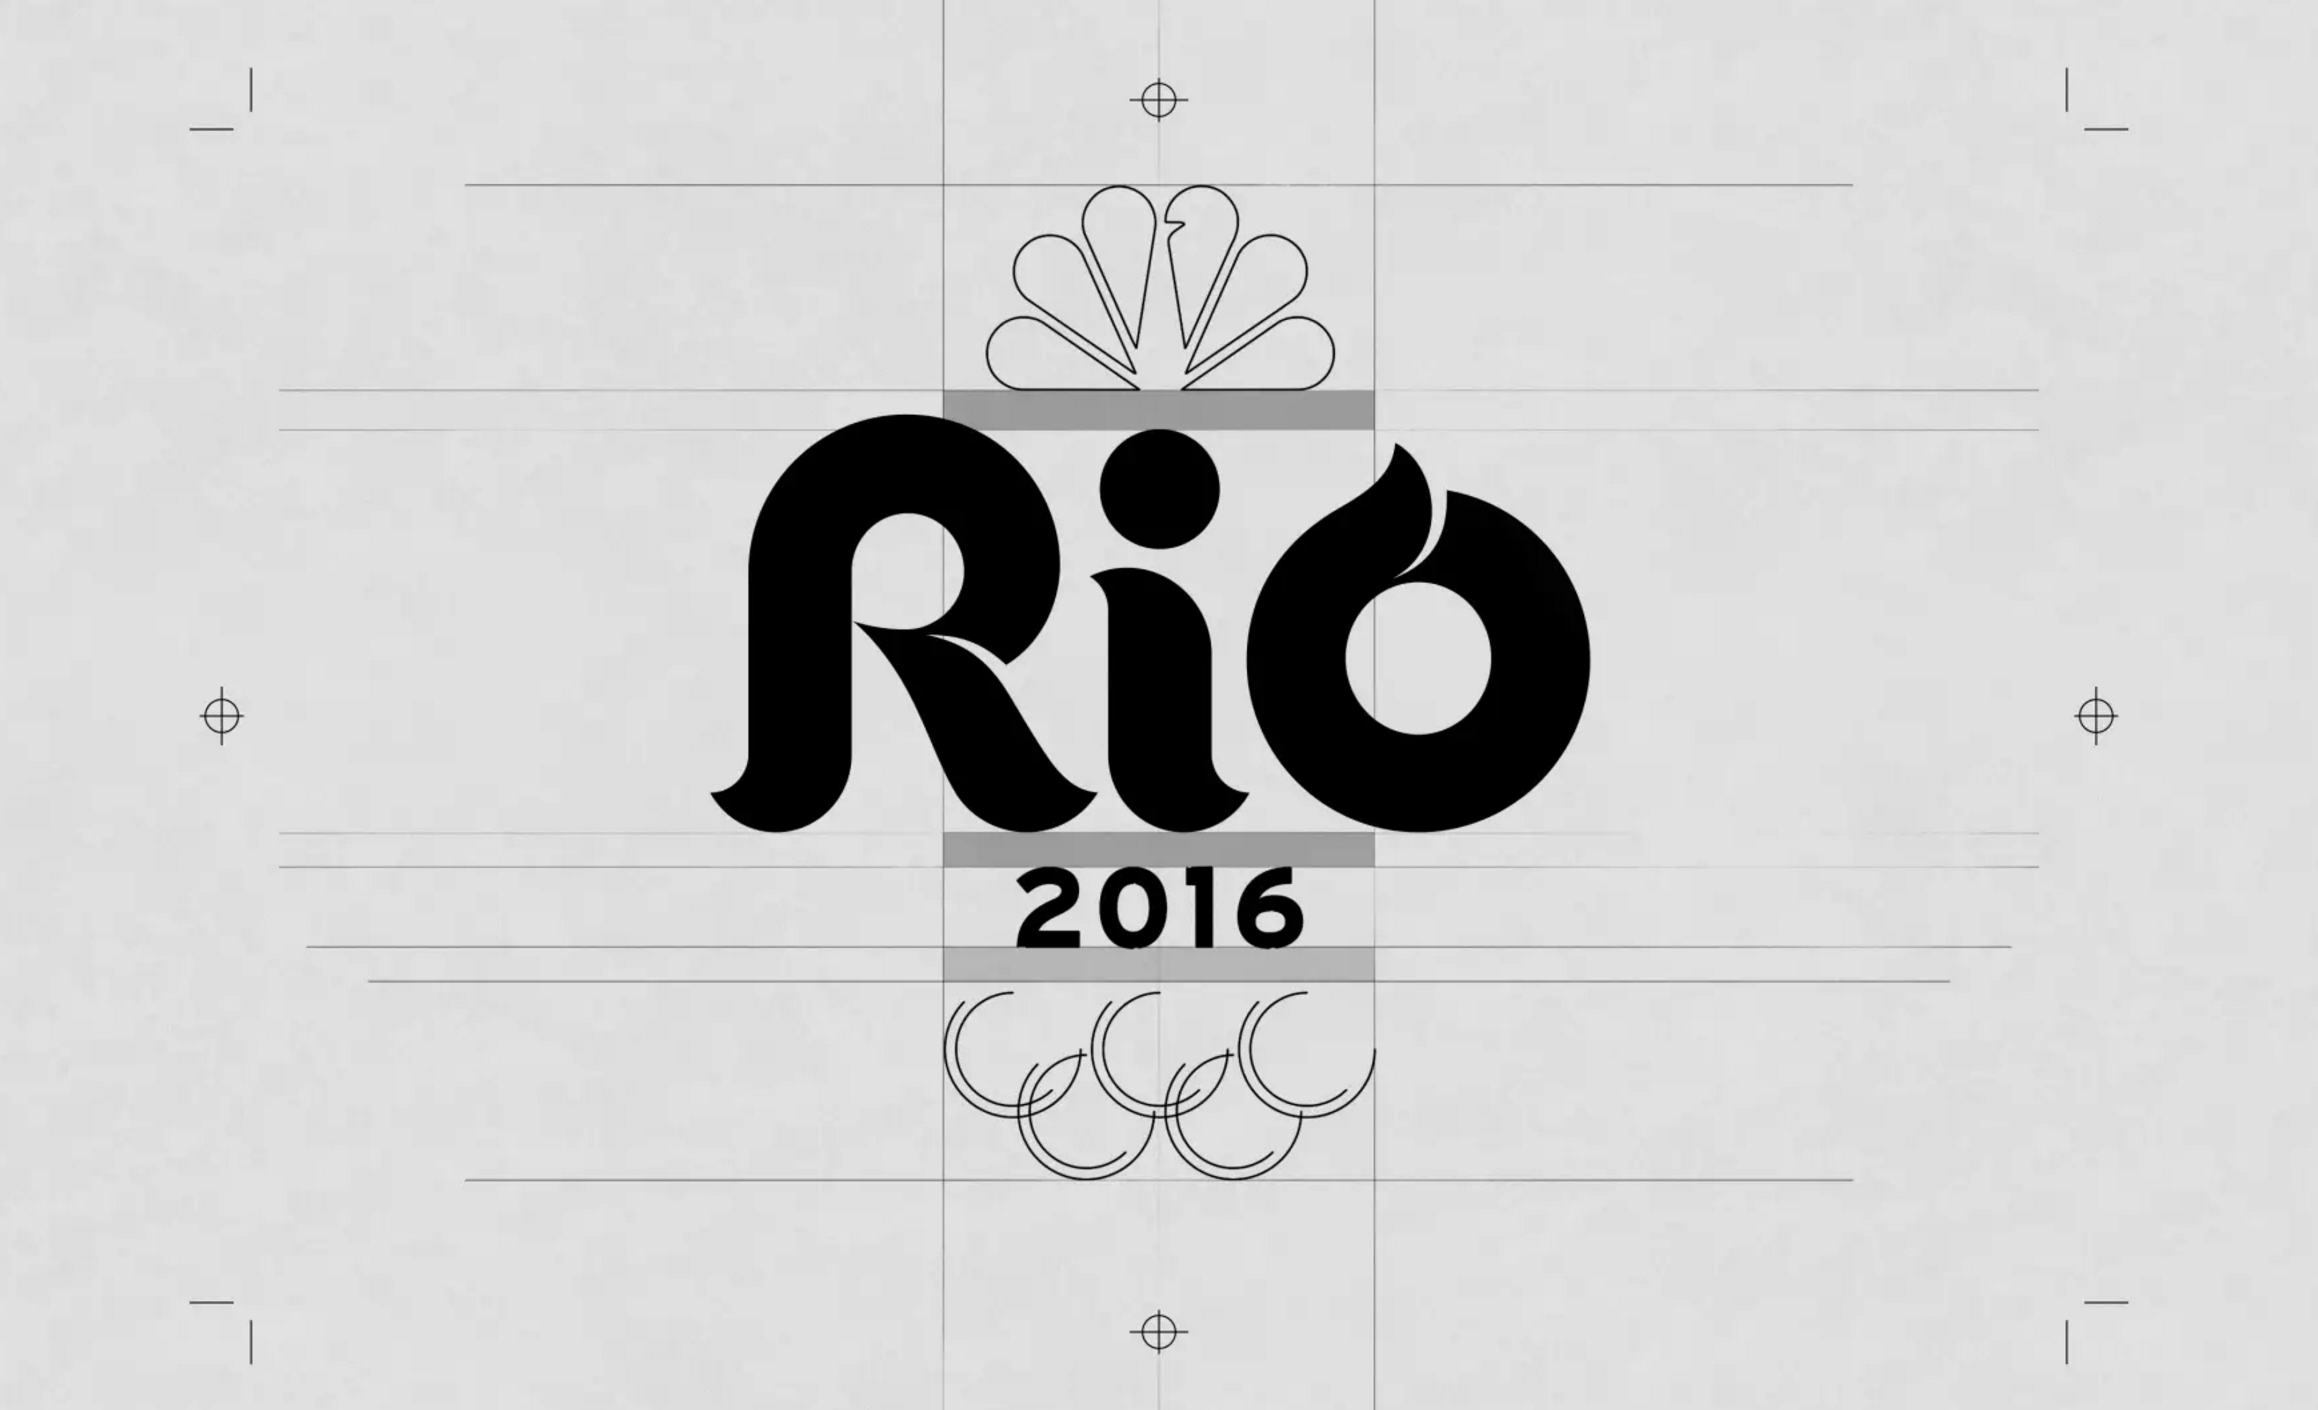 Graphic design firm Trollbäck + Company designed the primary NBC Rio Olympics logo.